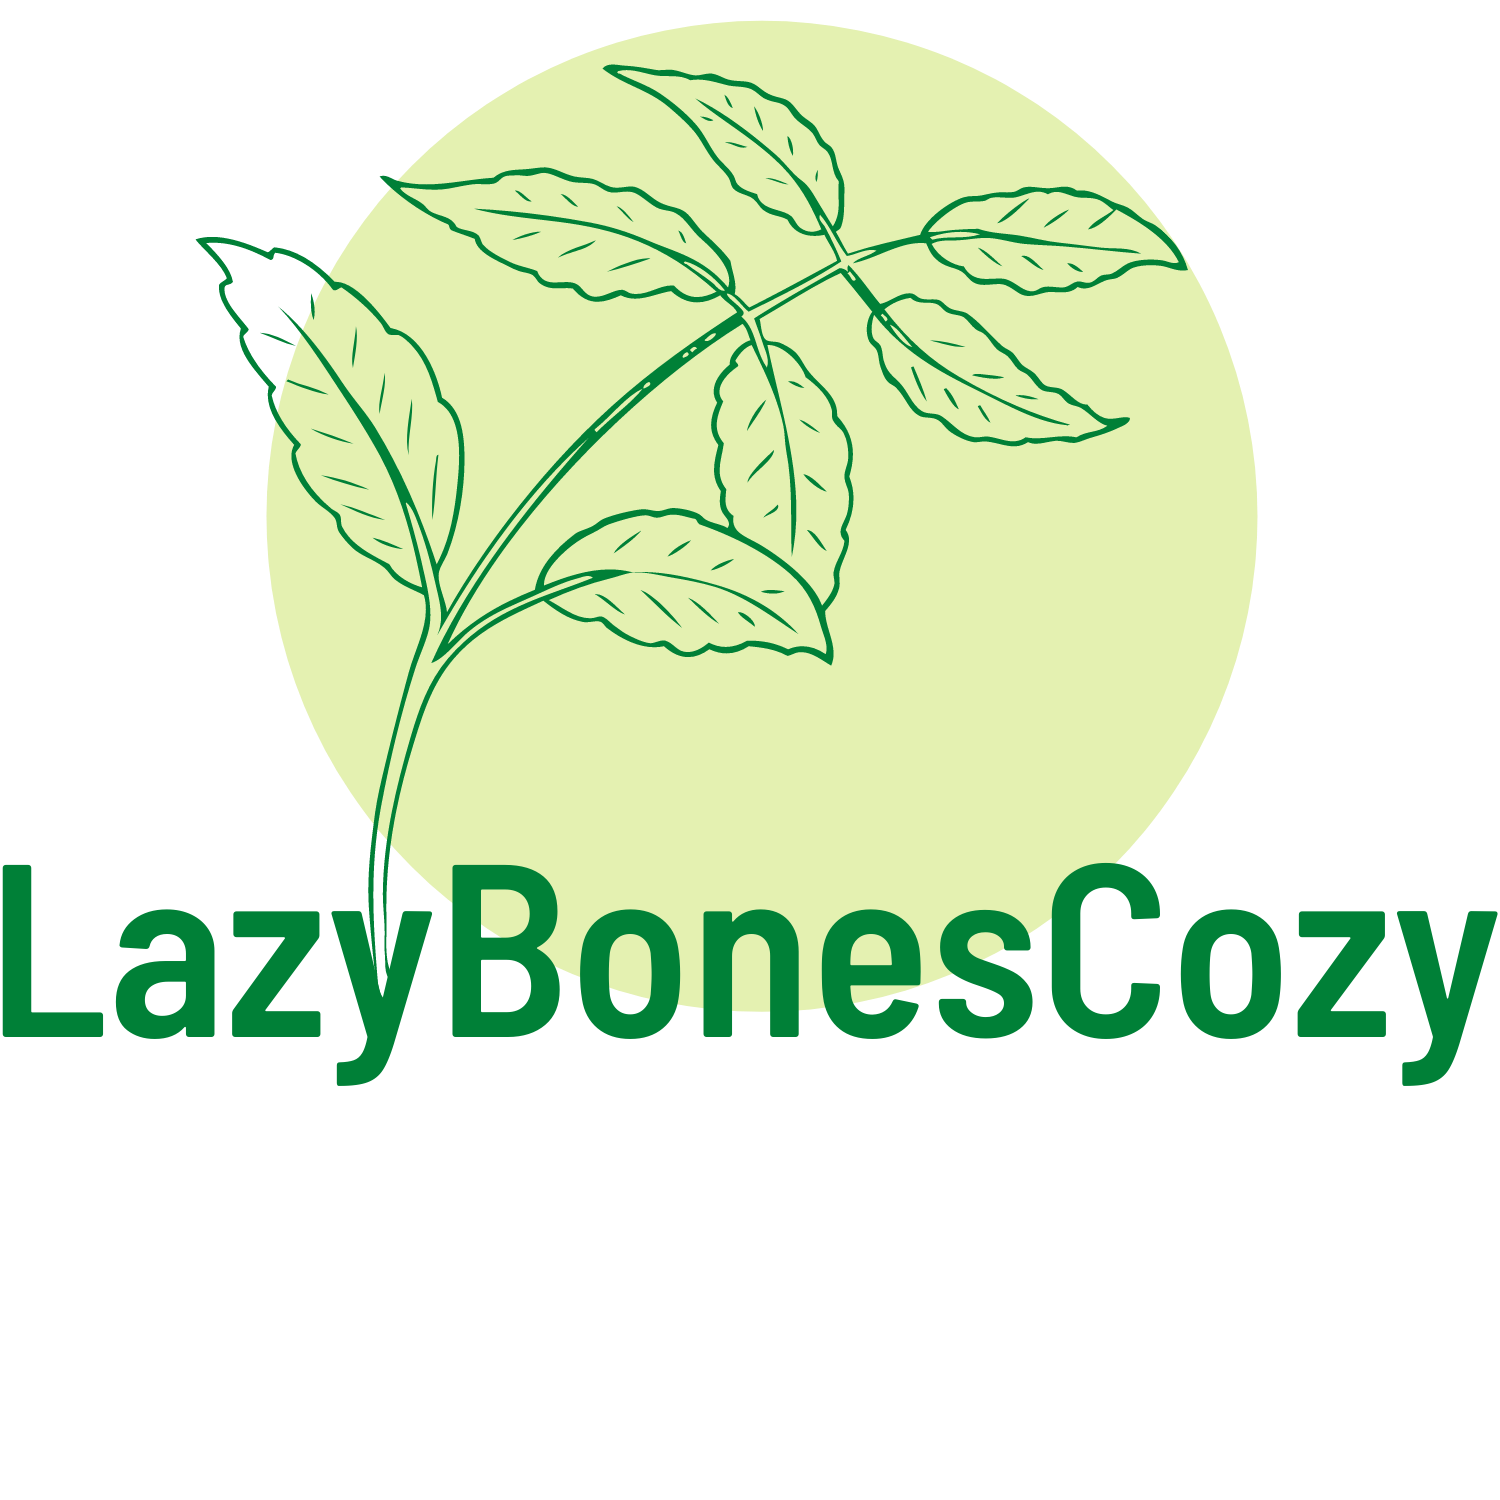 LazyBonesCozy.png